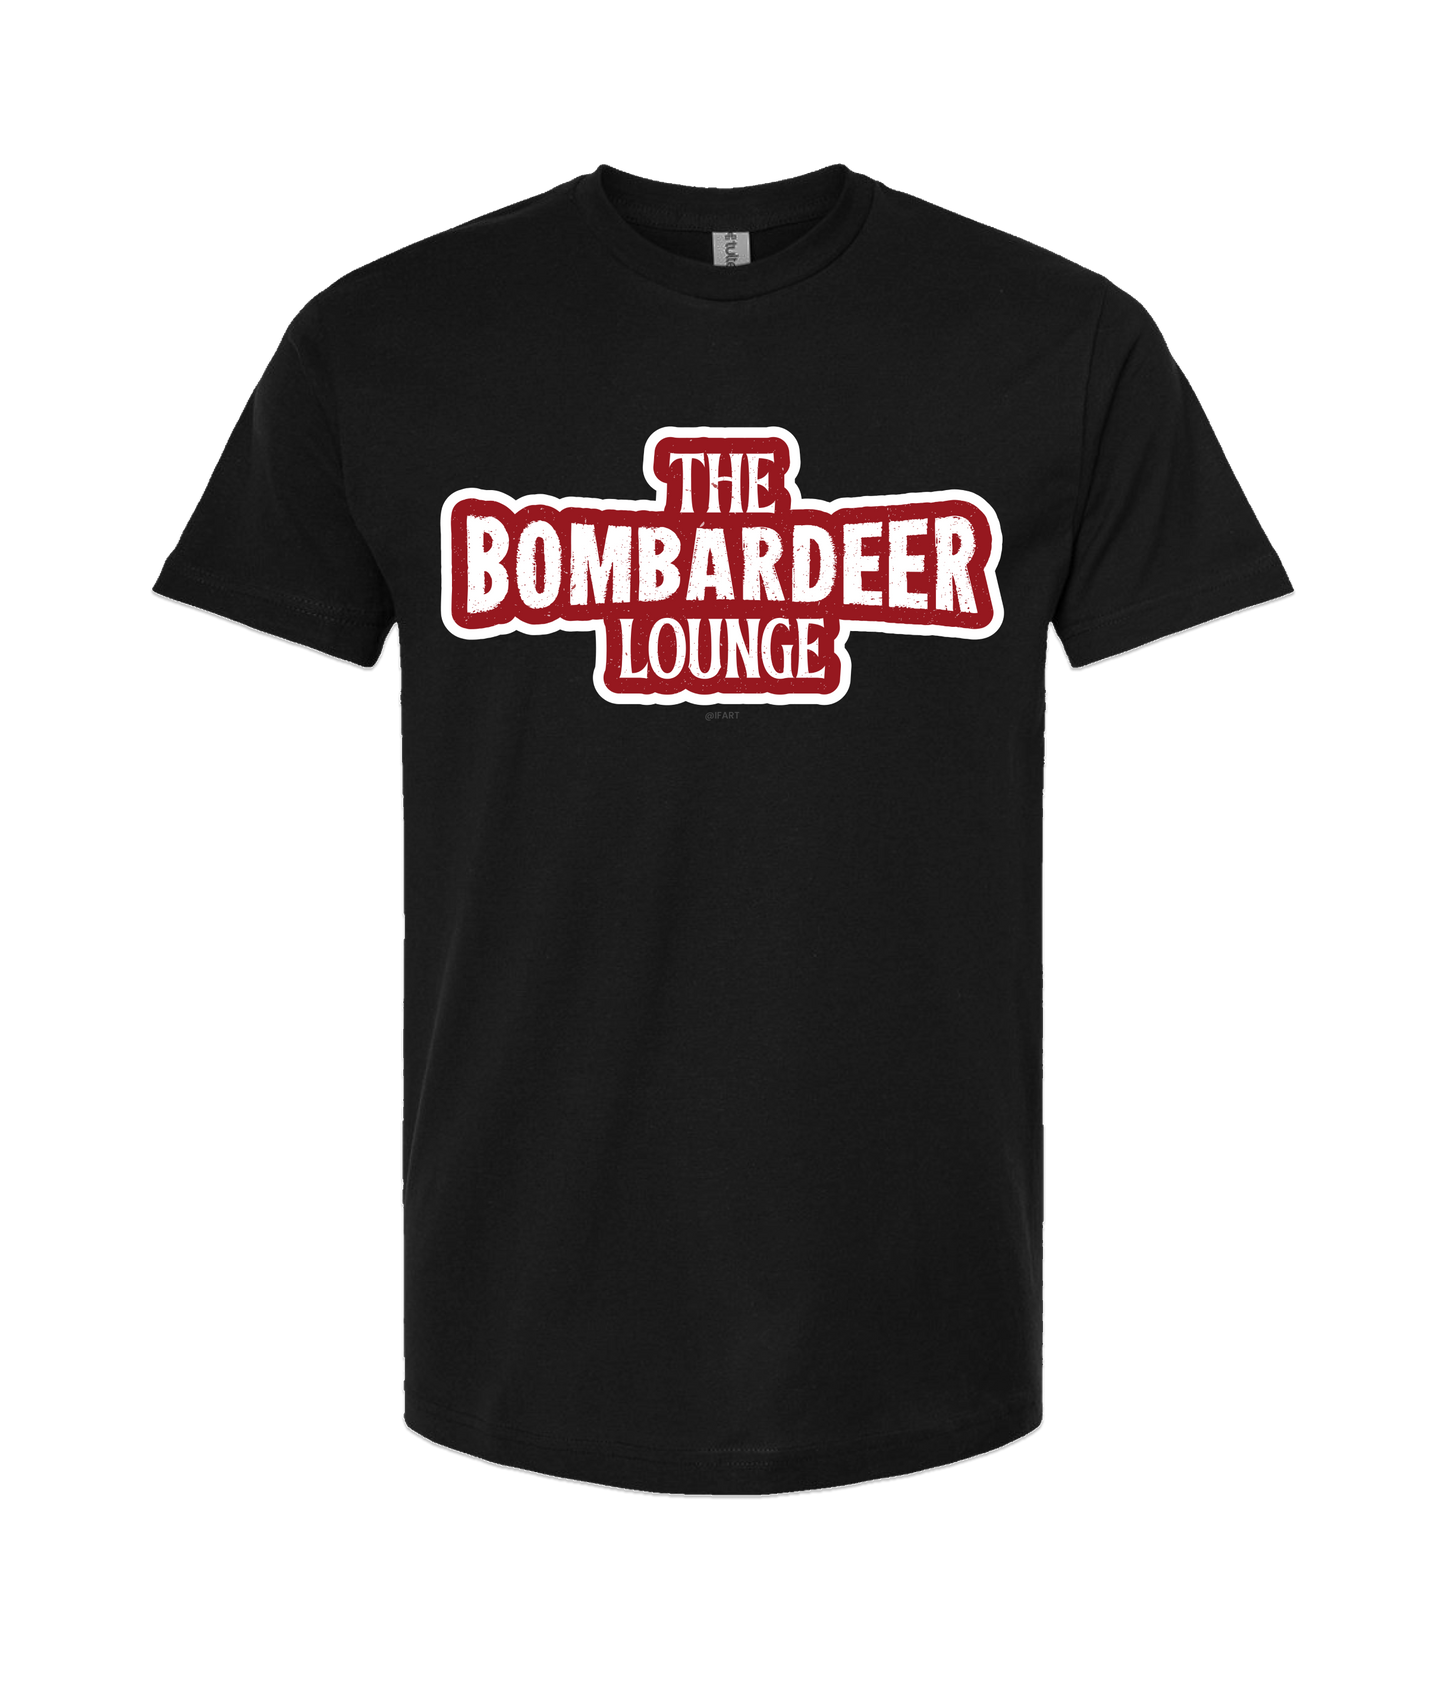 iFart - BOMBARDEER LOUNGE - Black T-Shirt